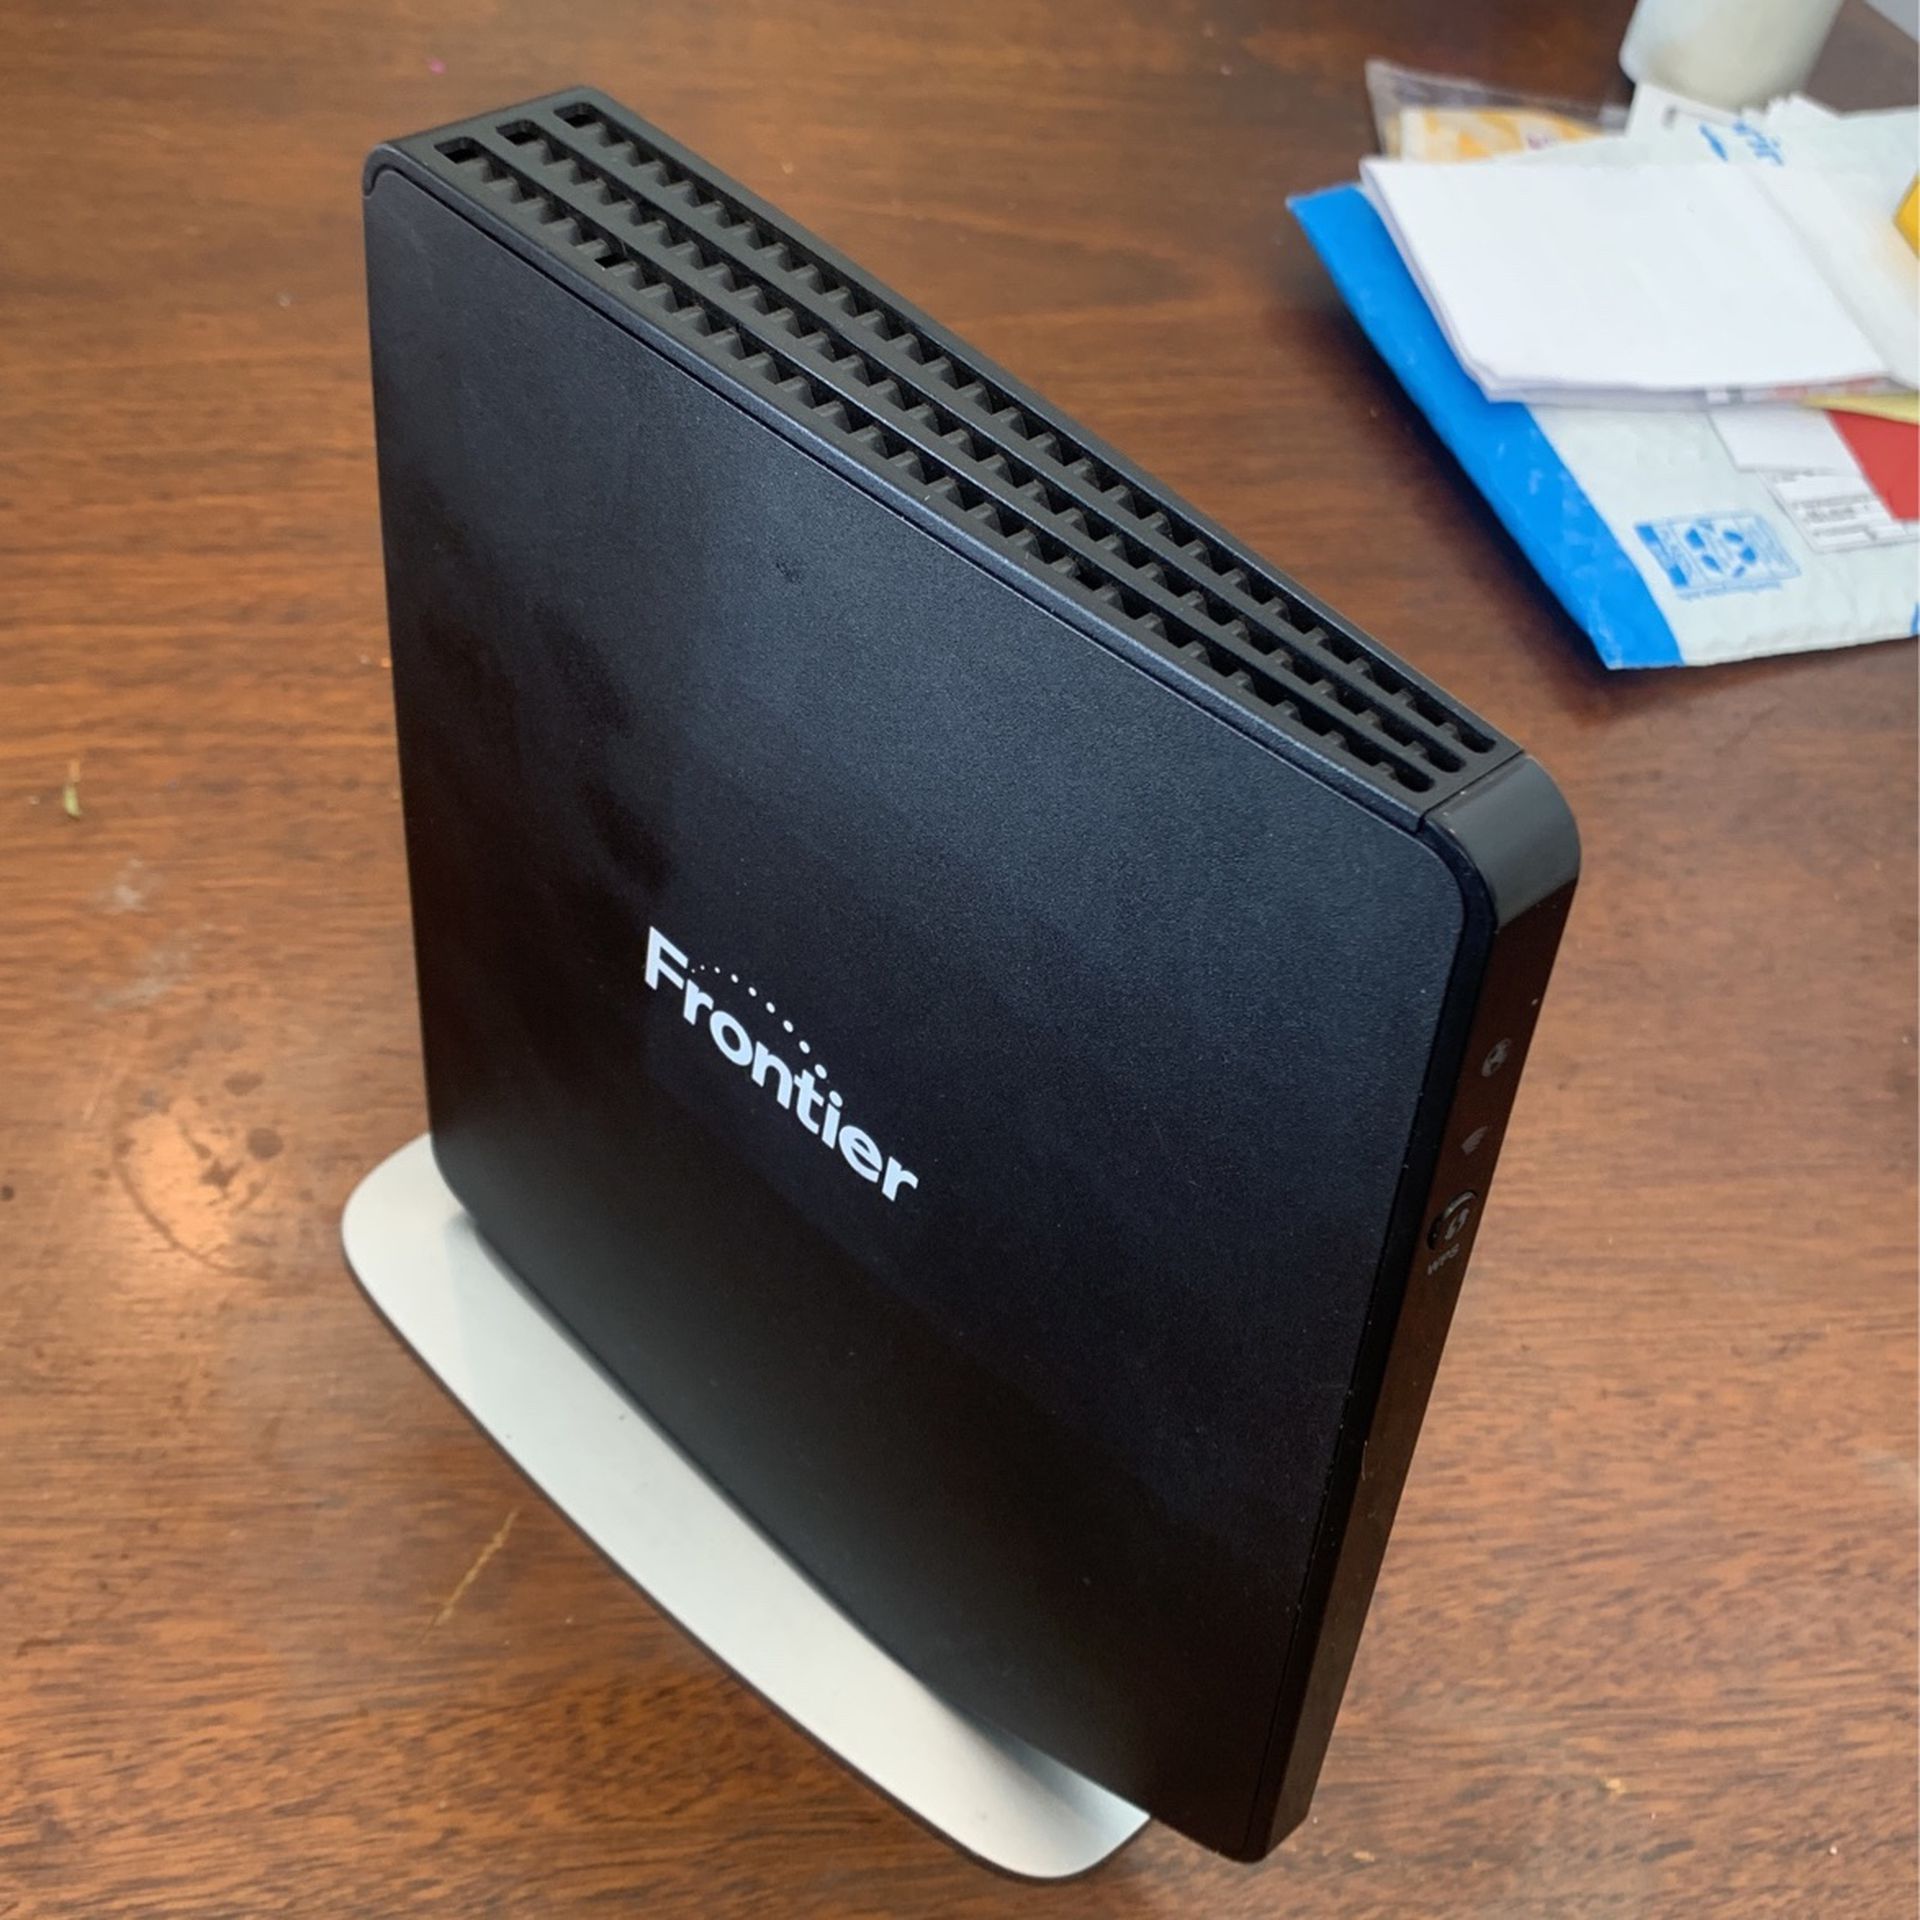 Frontier/Verizon Fios G1100 Router Modem